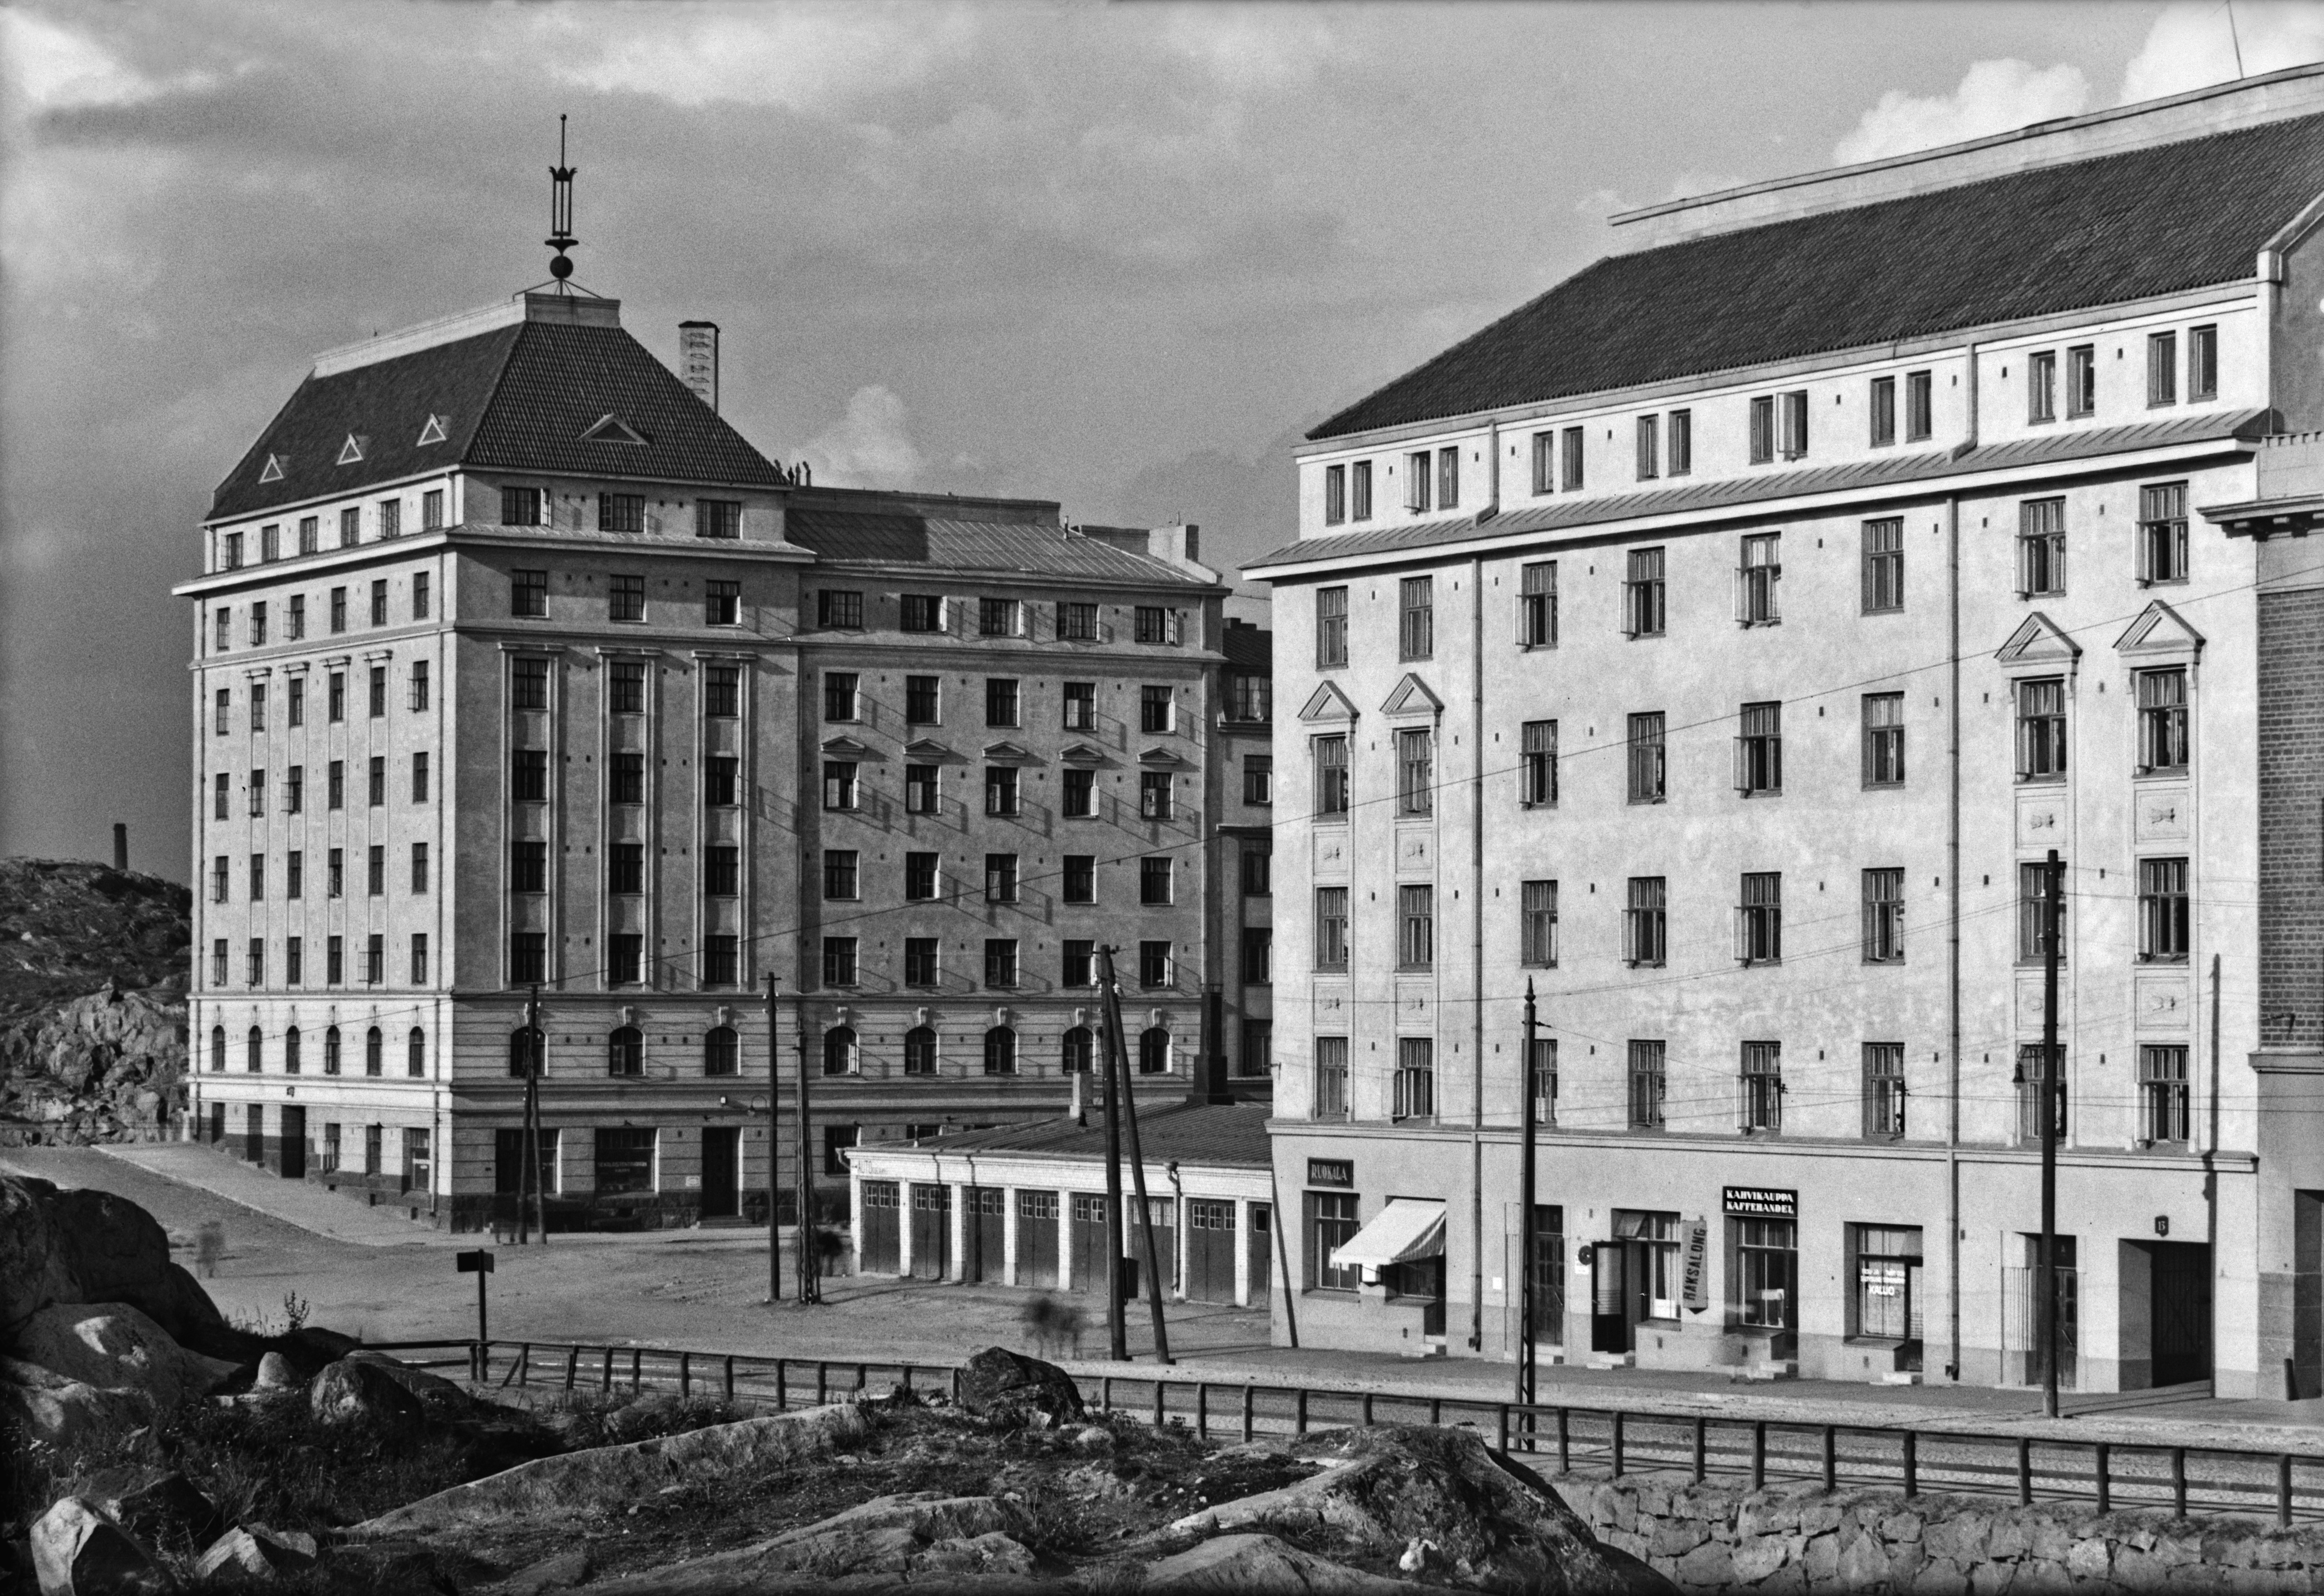 Kaarlenkatu 13, 15 (autotallit), 17 - Helsinginkatu 23. Autotallit (Kaarlenkatu 15) on purettu ja niiden tilalle on rakennettu asuinrakennus vuonna 1929. Osoitteessa Kaarlenkatu 17 sijaitsee mm. ruokala, kampaamo ja kahvikauppa.